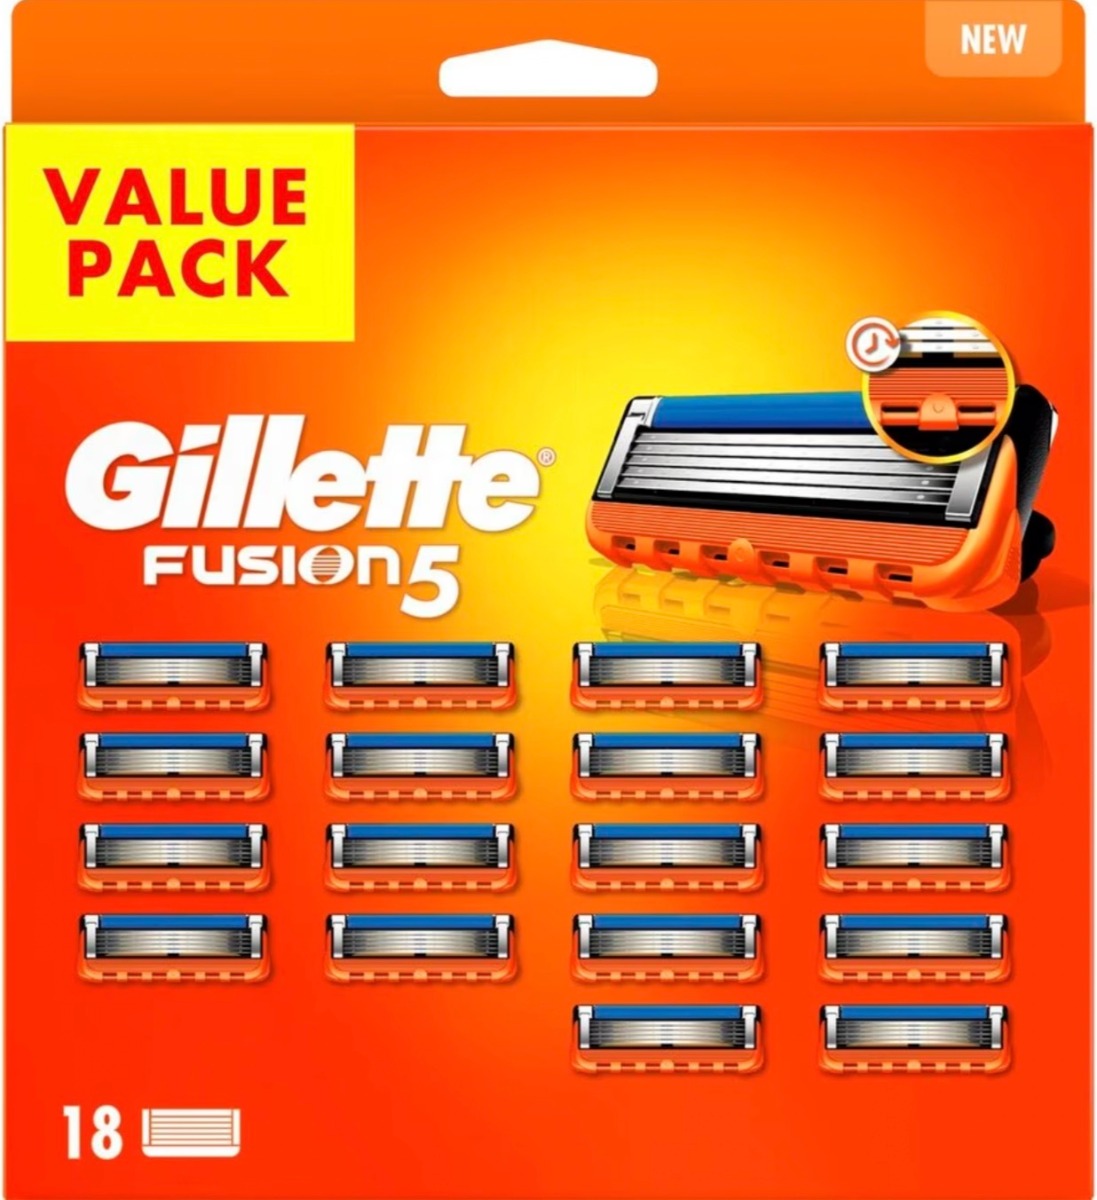 Gillette Fusion5 - Navulmesjes - Voor Mannen - 18 Navulmesjes